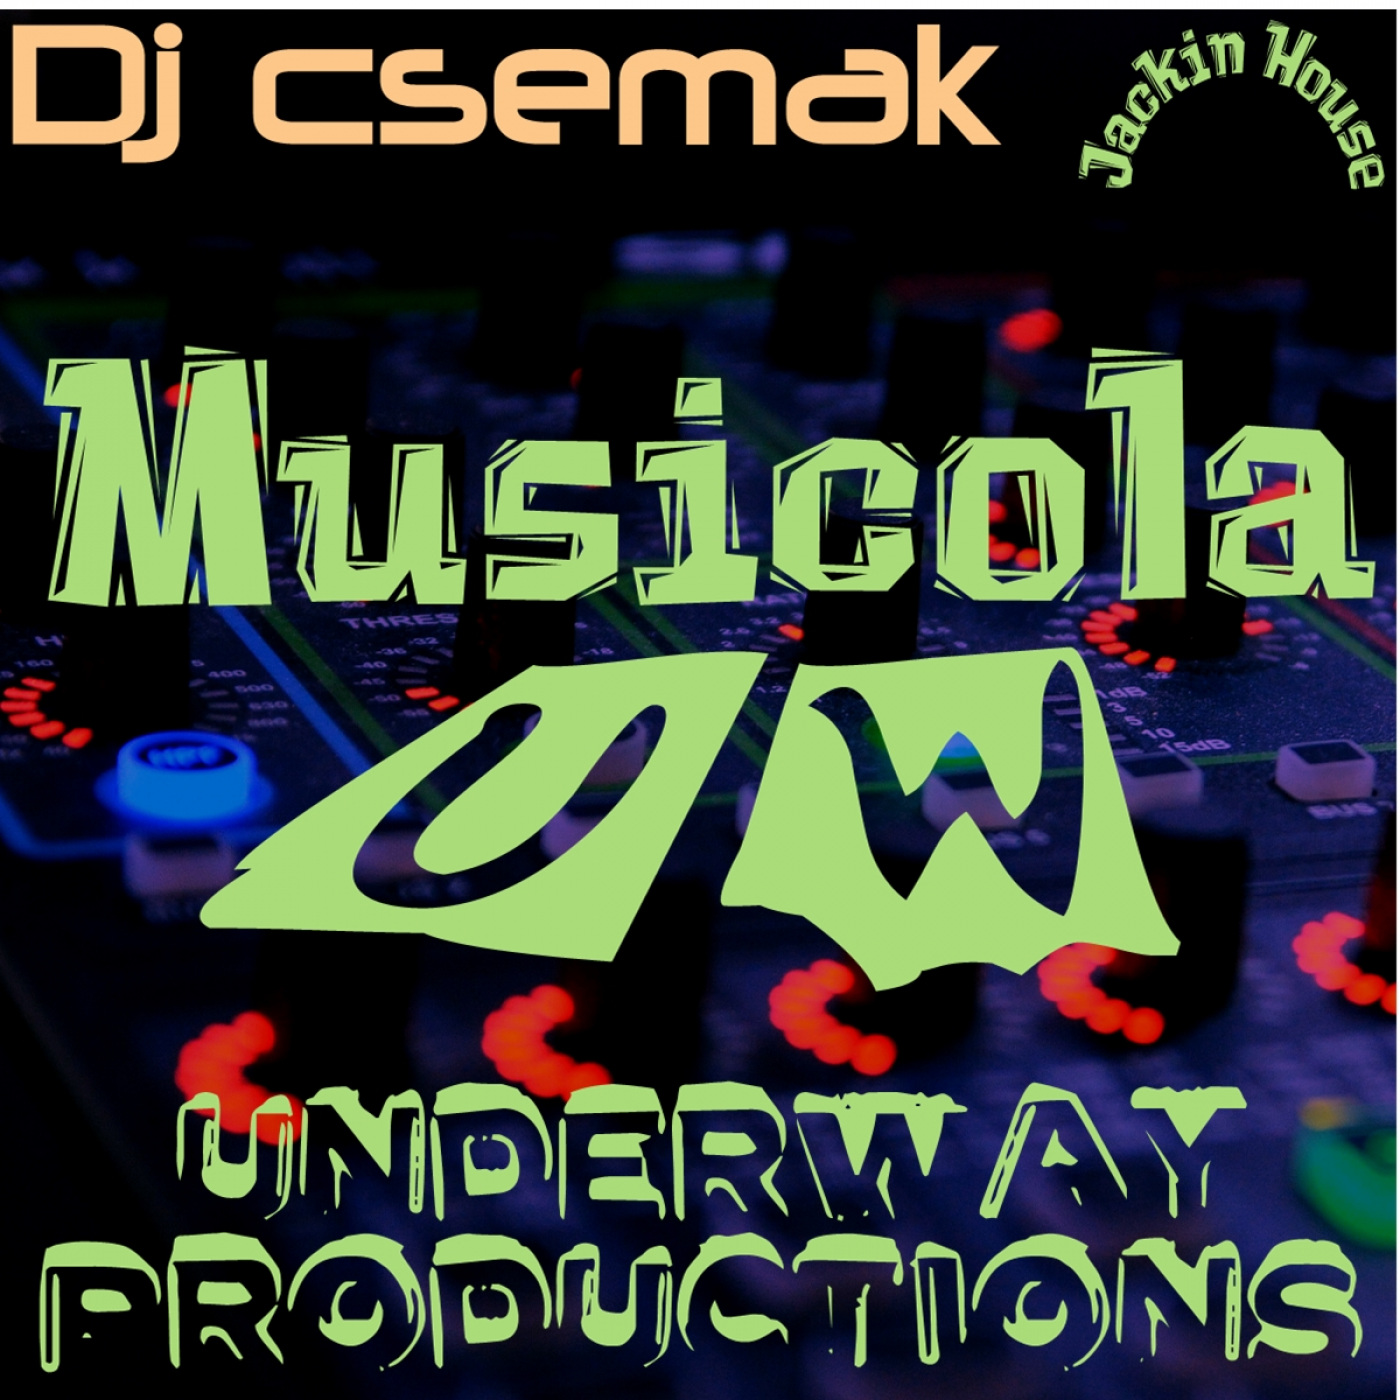 Dj Csemak - Musicola / Underway Productions